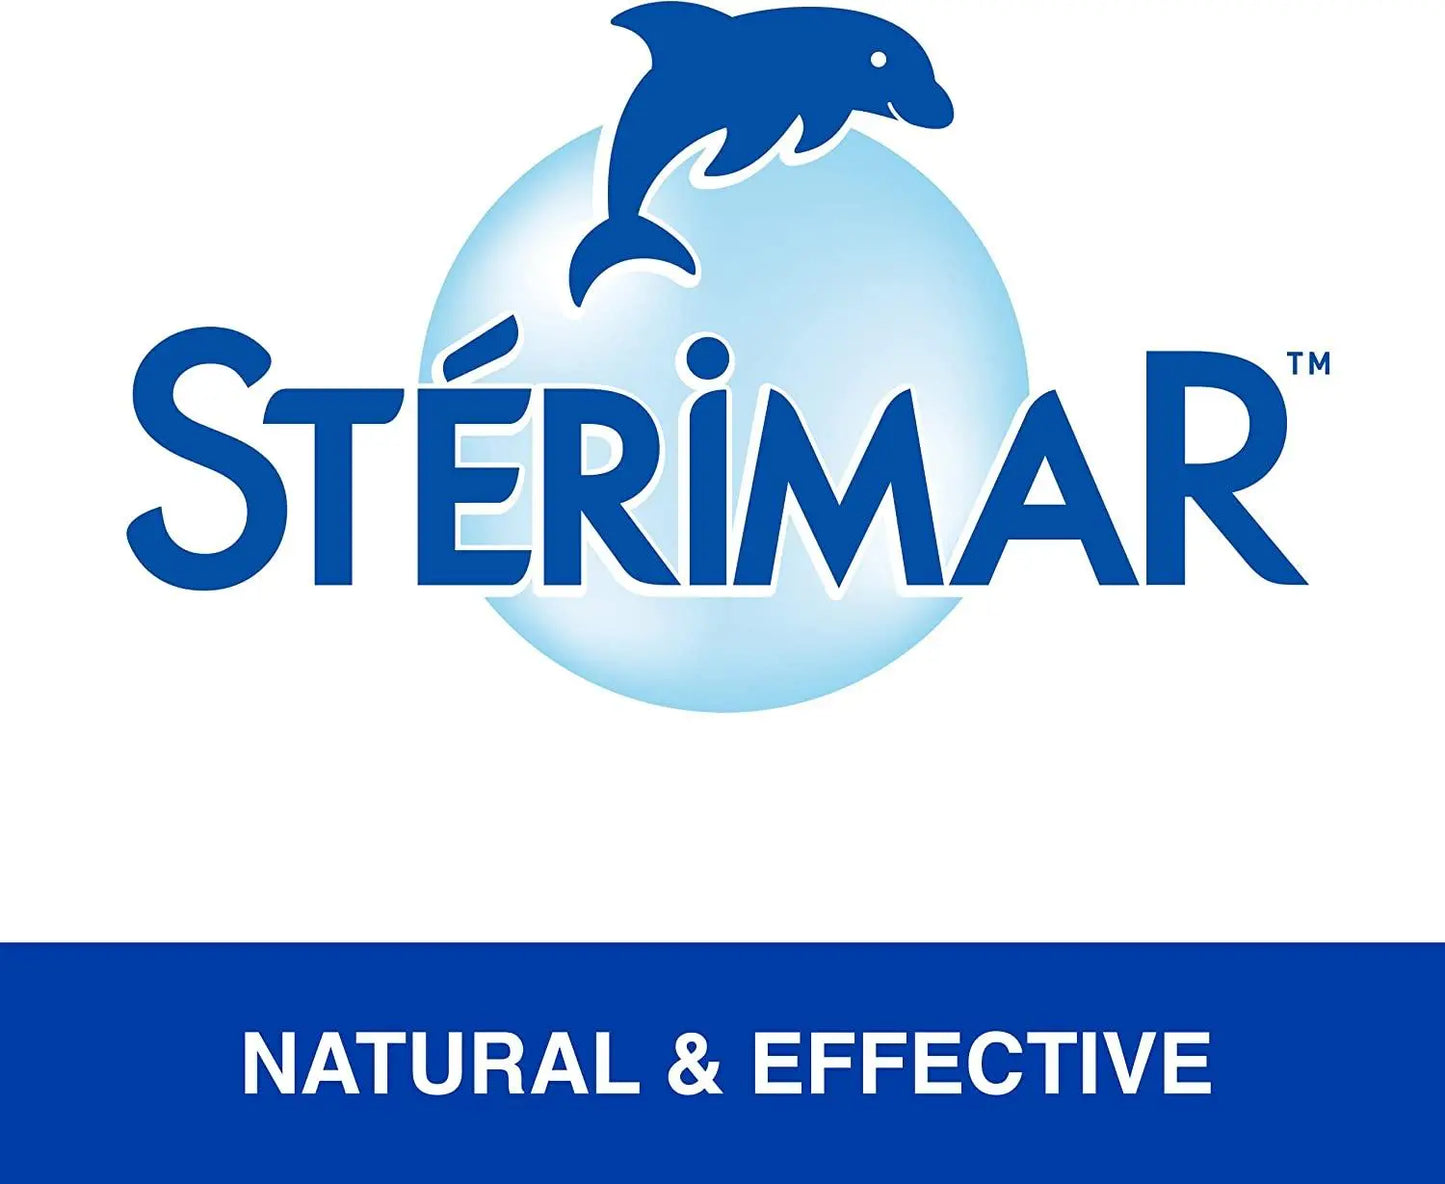 Sterimar Congestion Relief Nasal Spray 50ml